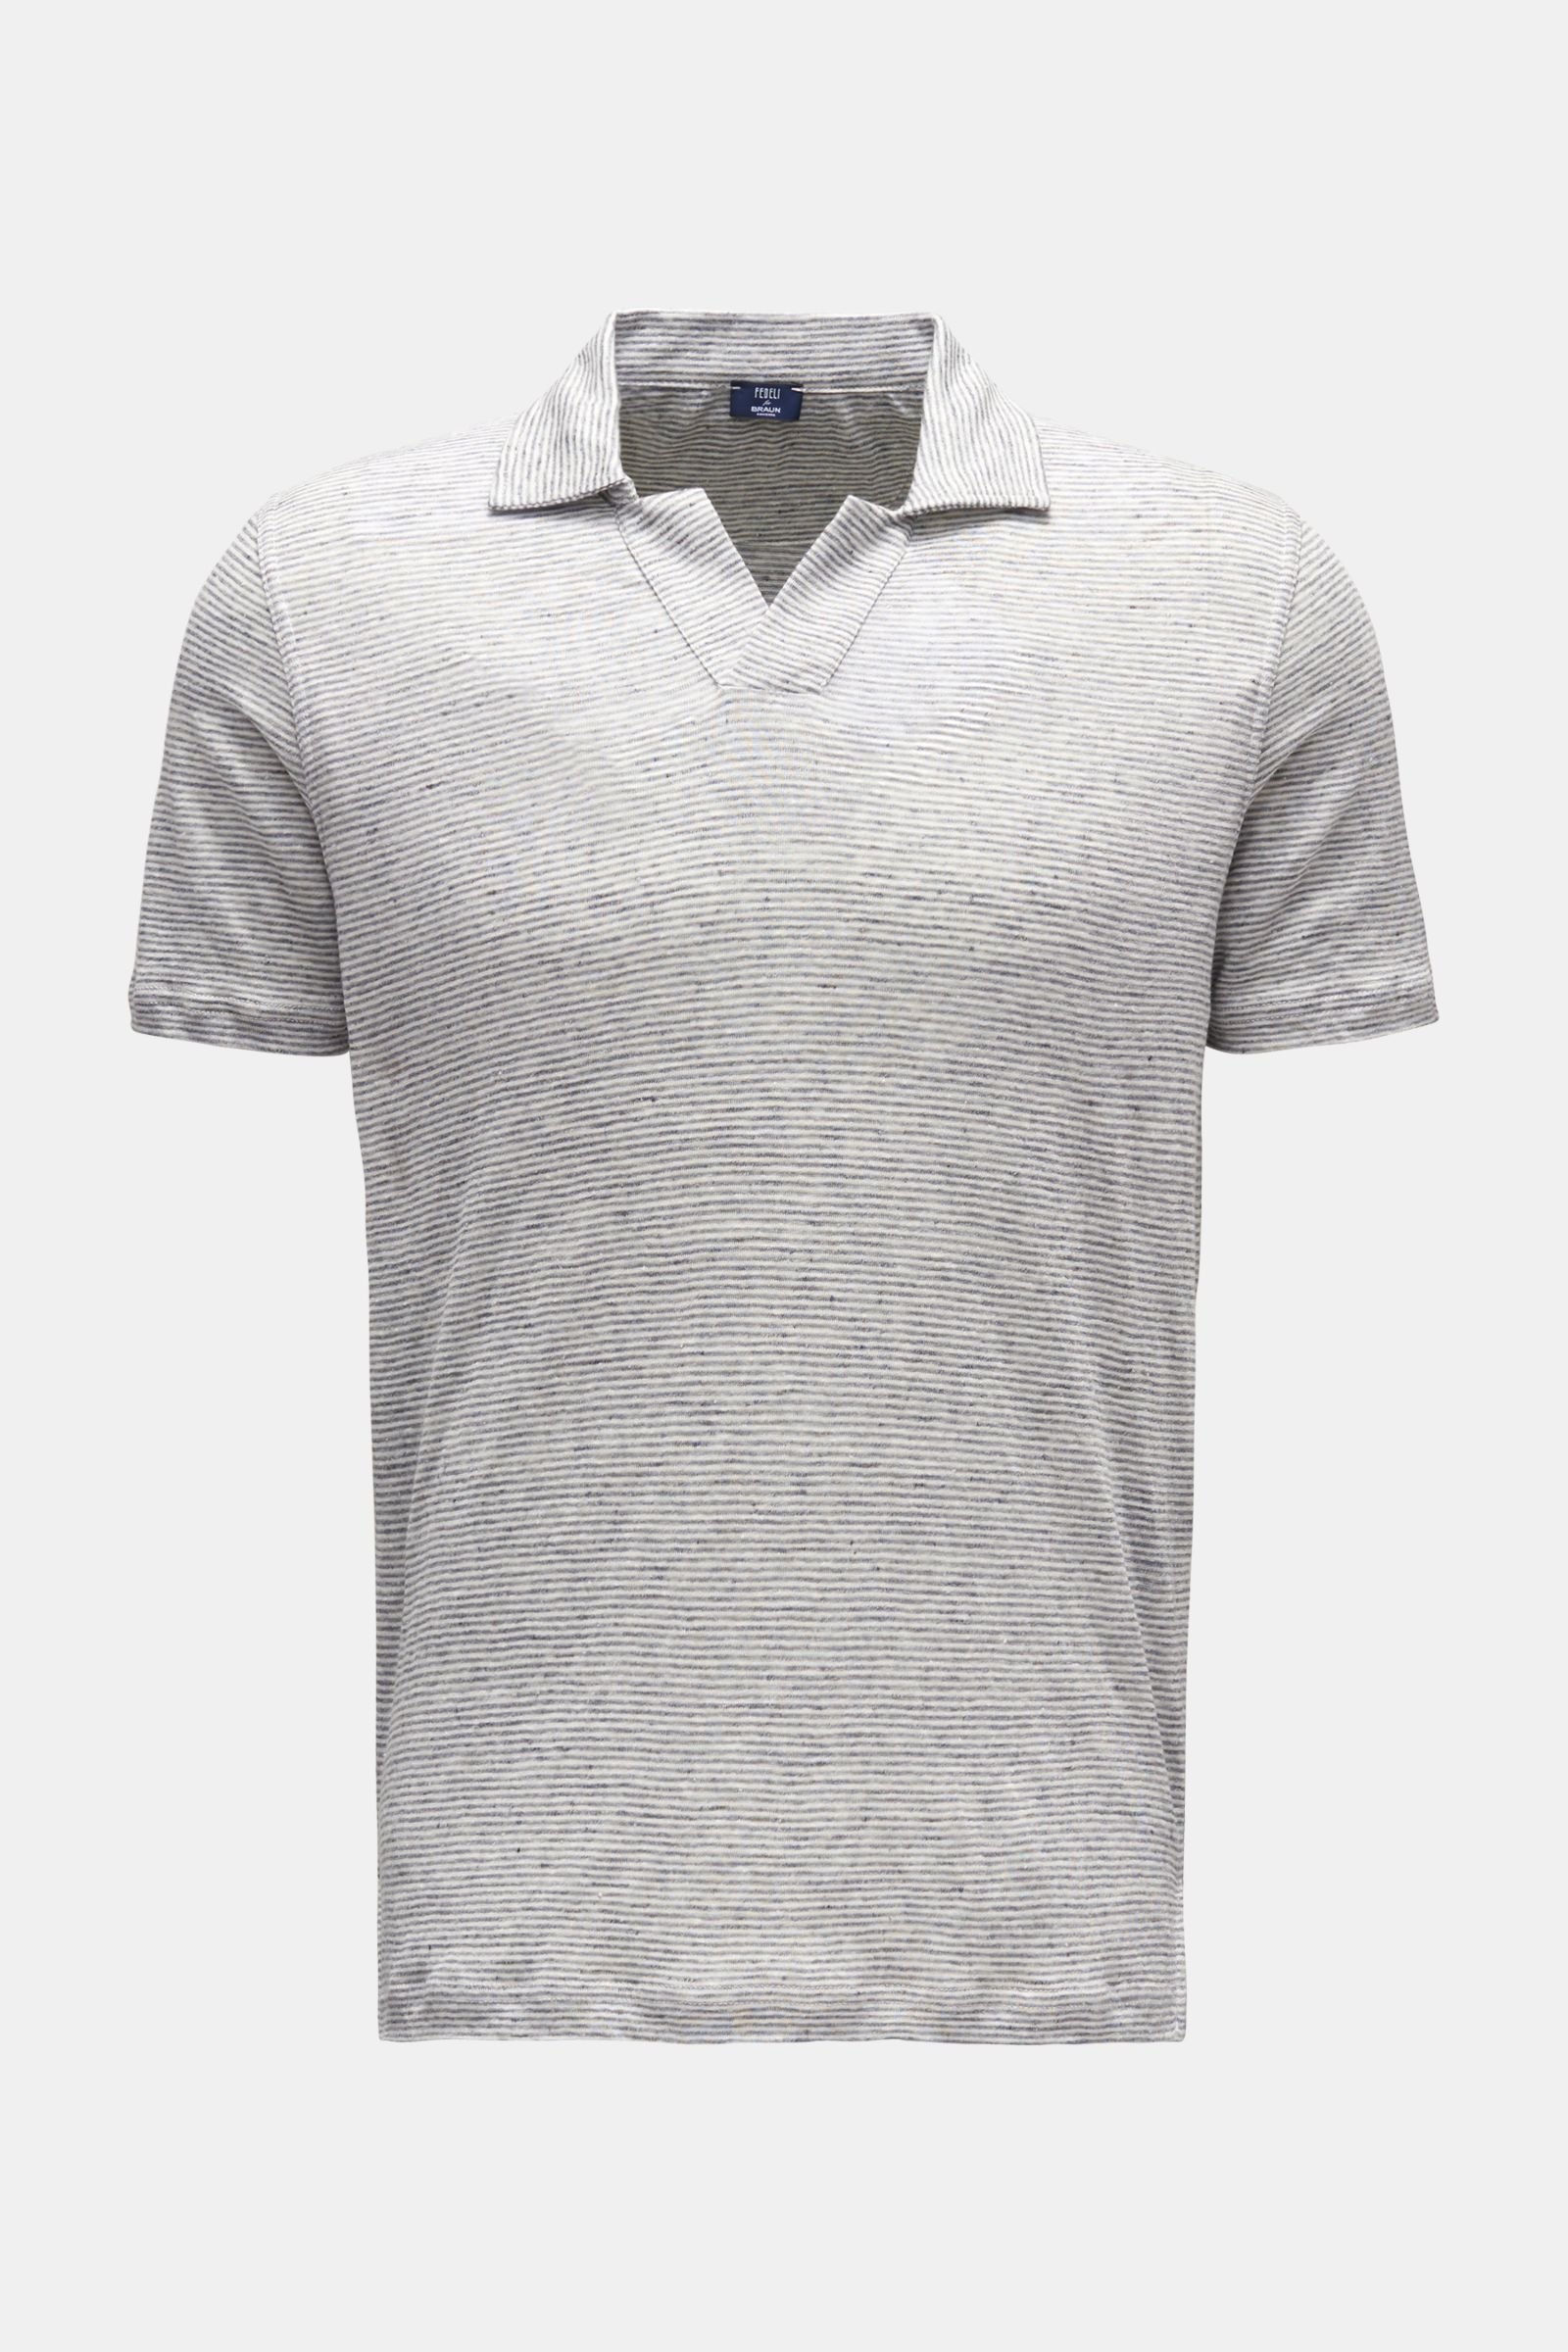 Linen polo shirt 'Franky' grey/white striped